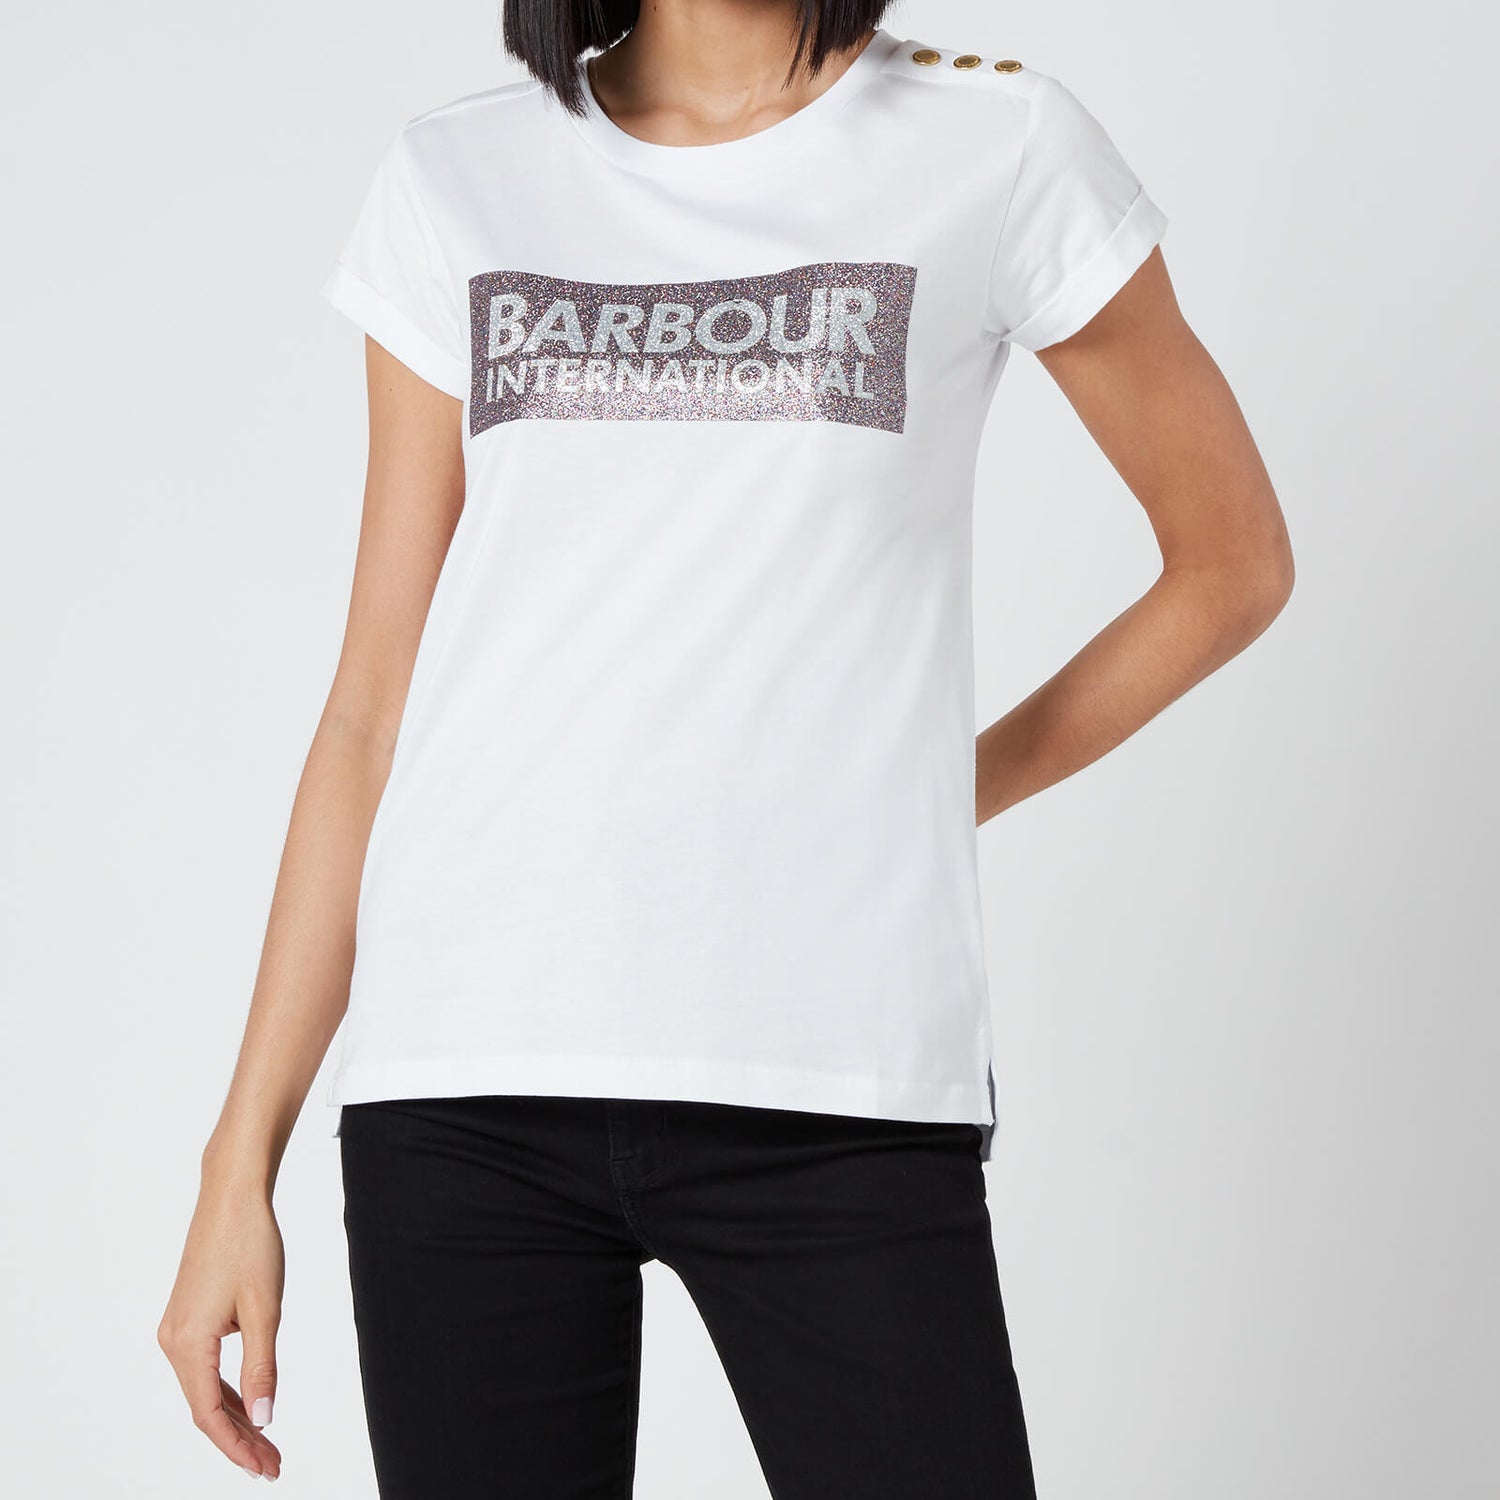 Barbour International Women's Burnout T-Shirt - White